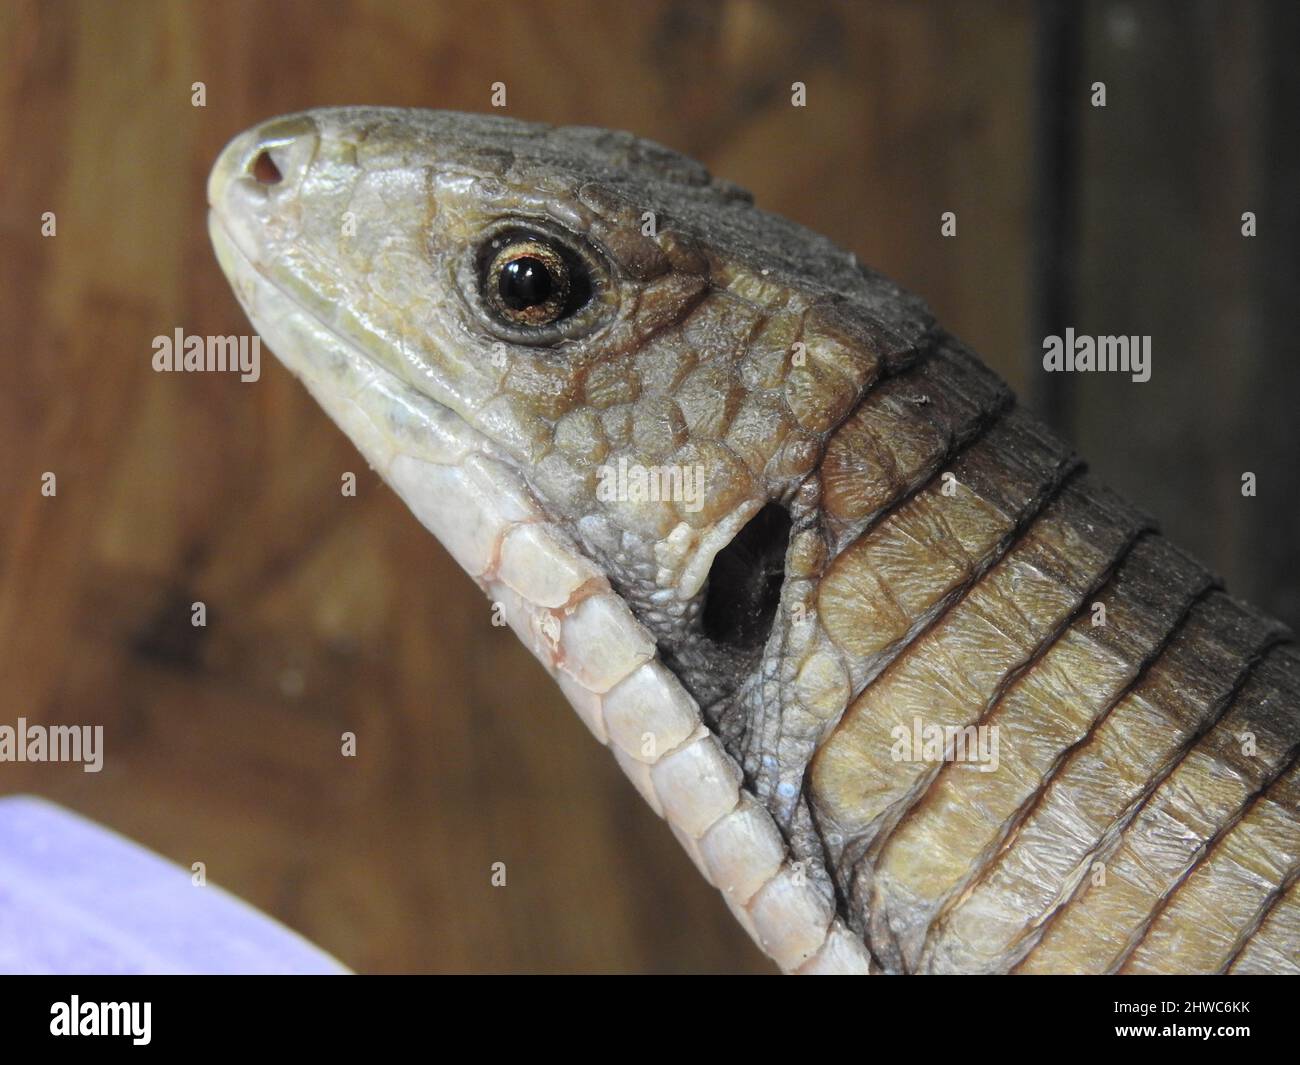 Iguana vert (Iguana Iguana) en contact visuel avec l'appareil photo, gros plan Banque D'Images